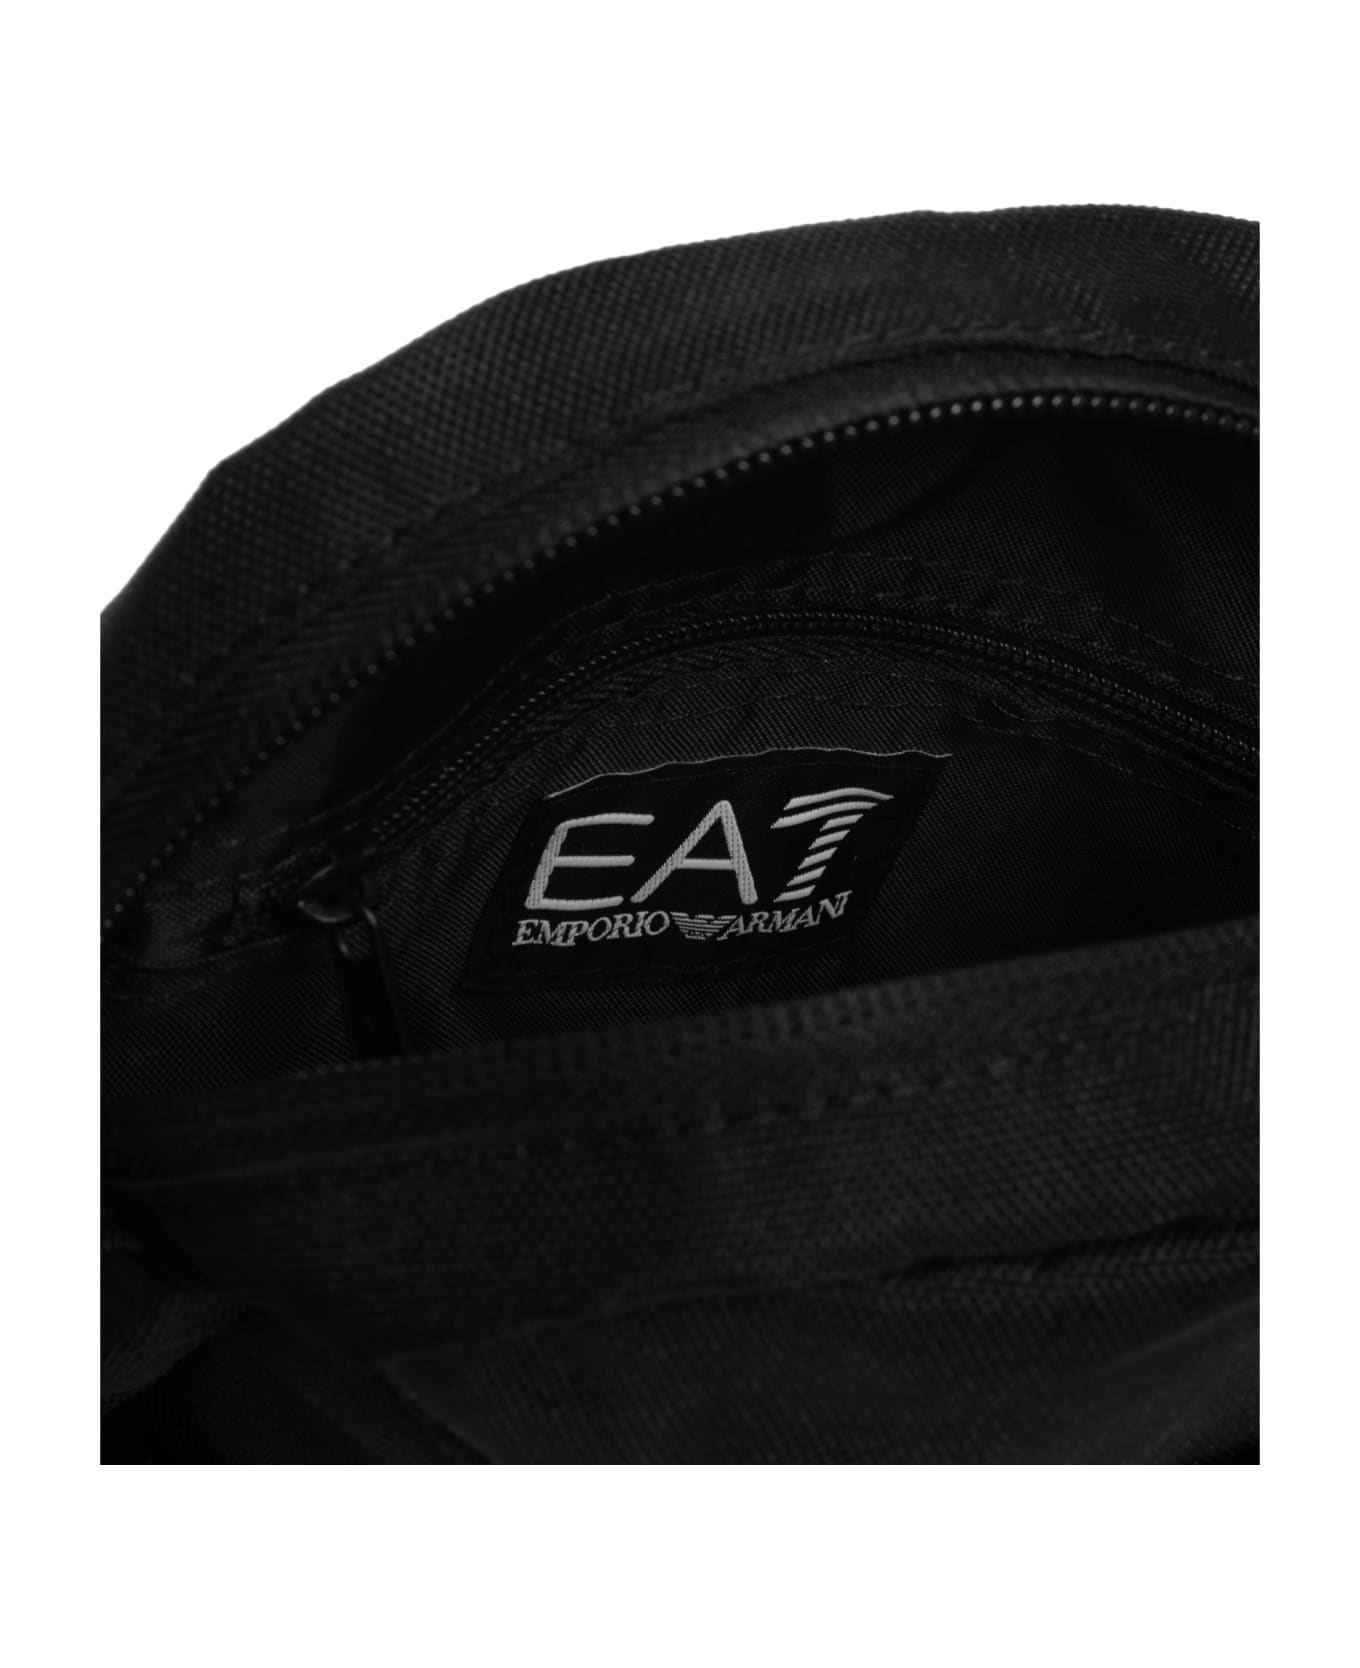 EA7 Crossbody Bag - Black ショルダーバッグ